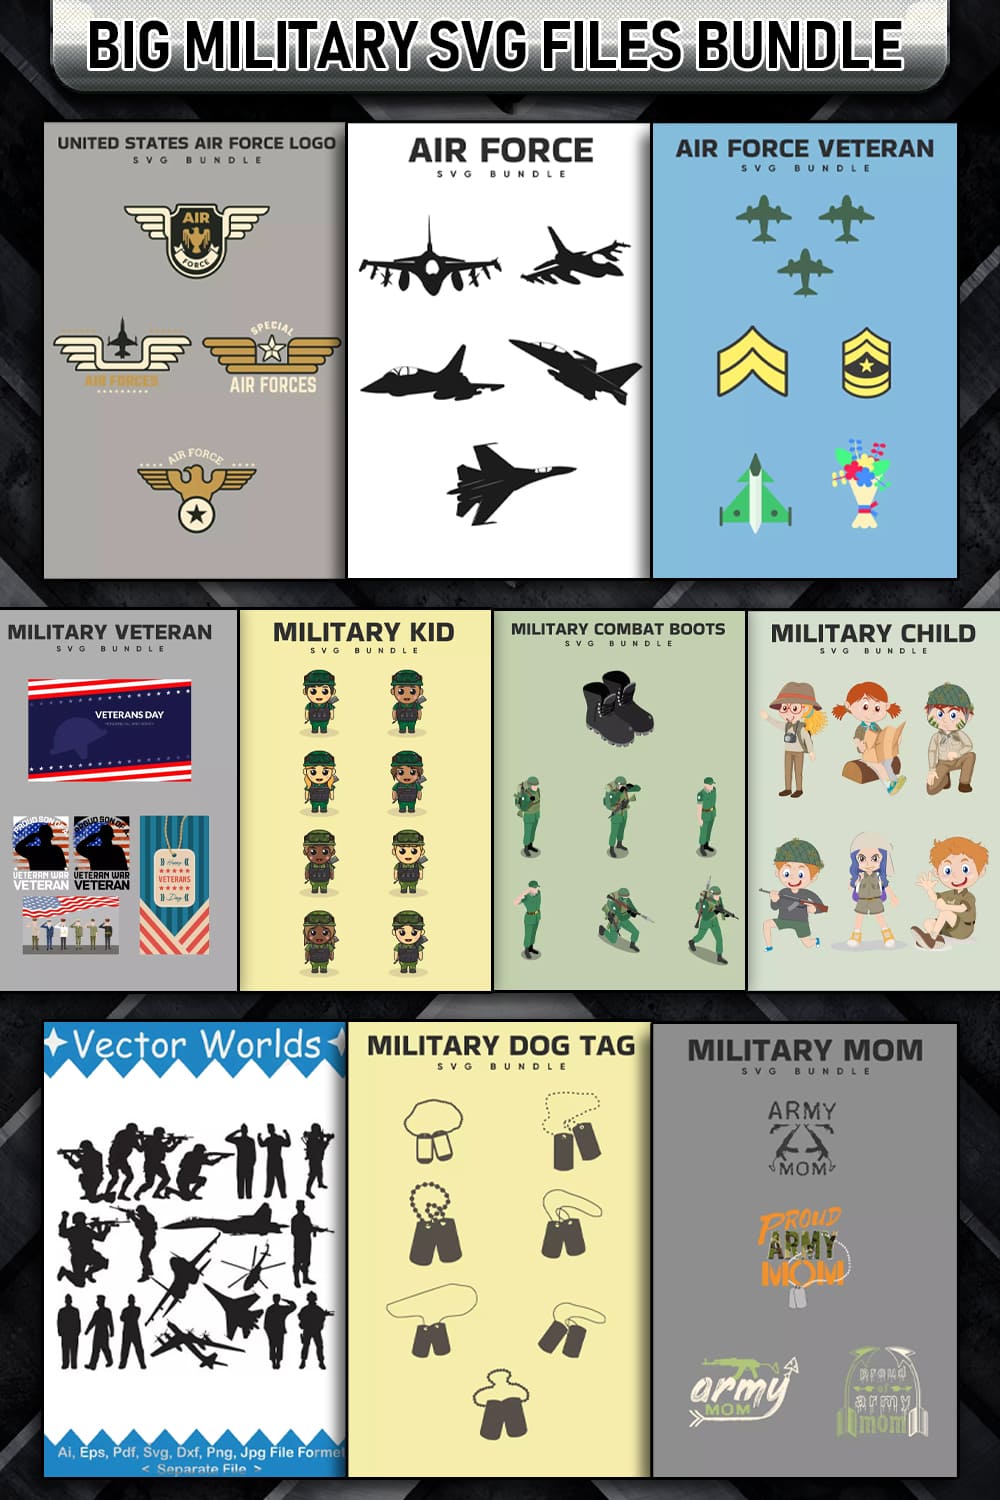 Big Military SVG Files Bundle Pinterest.